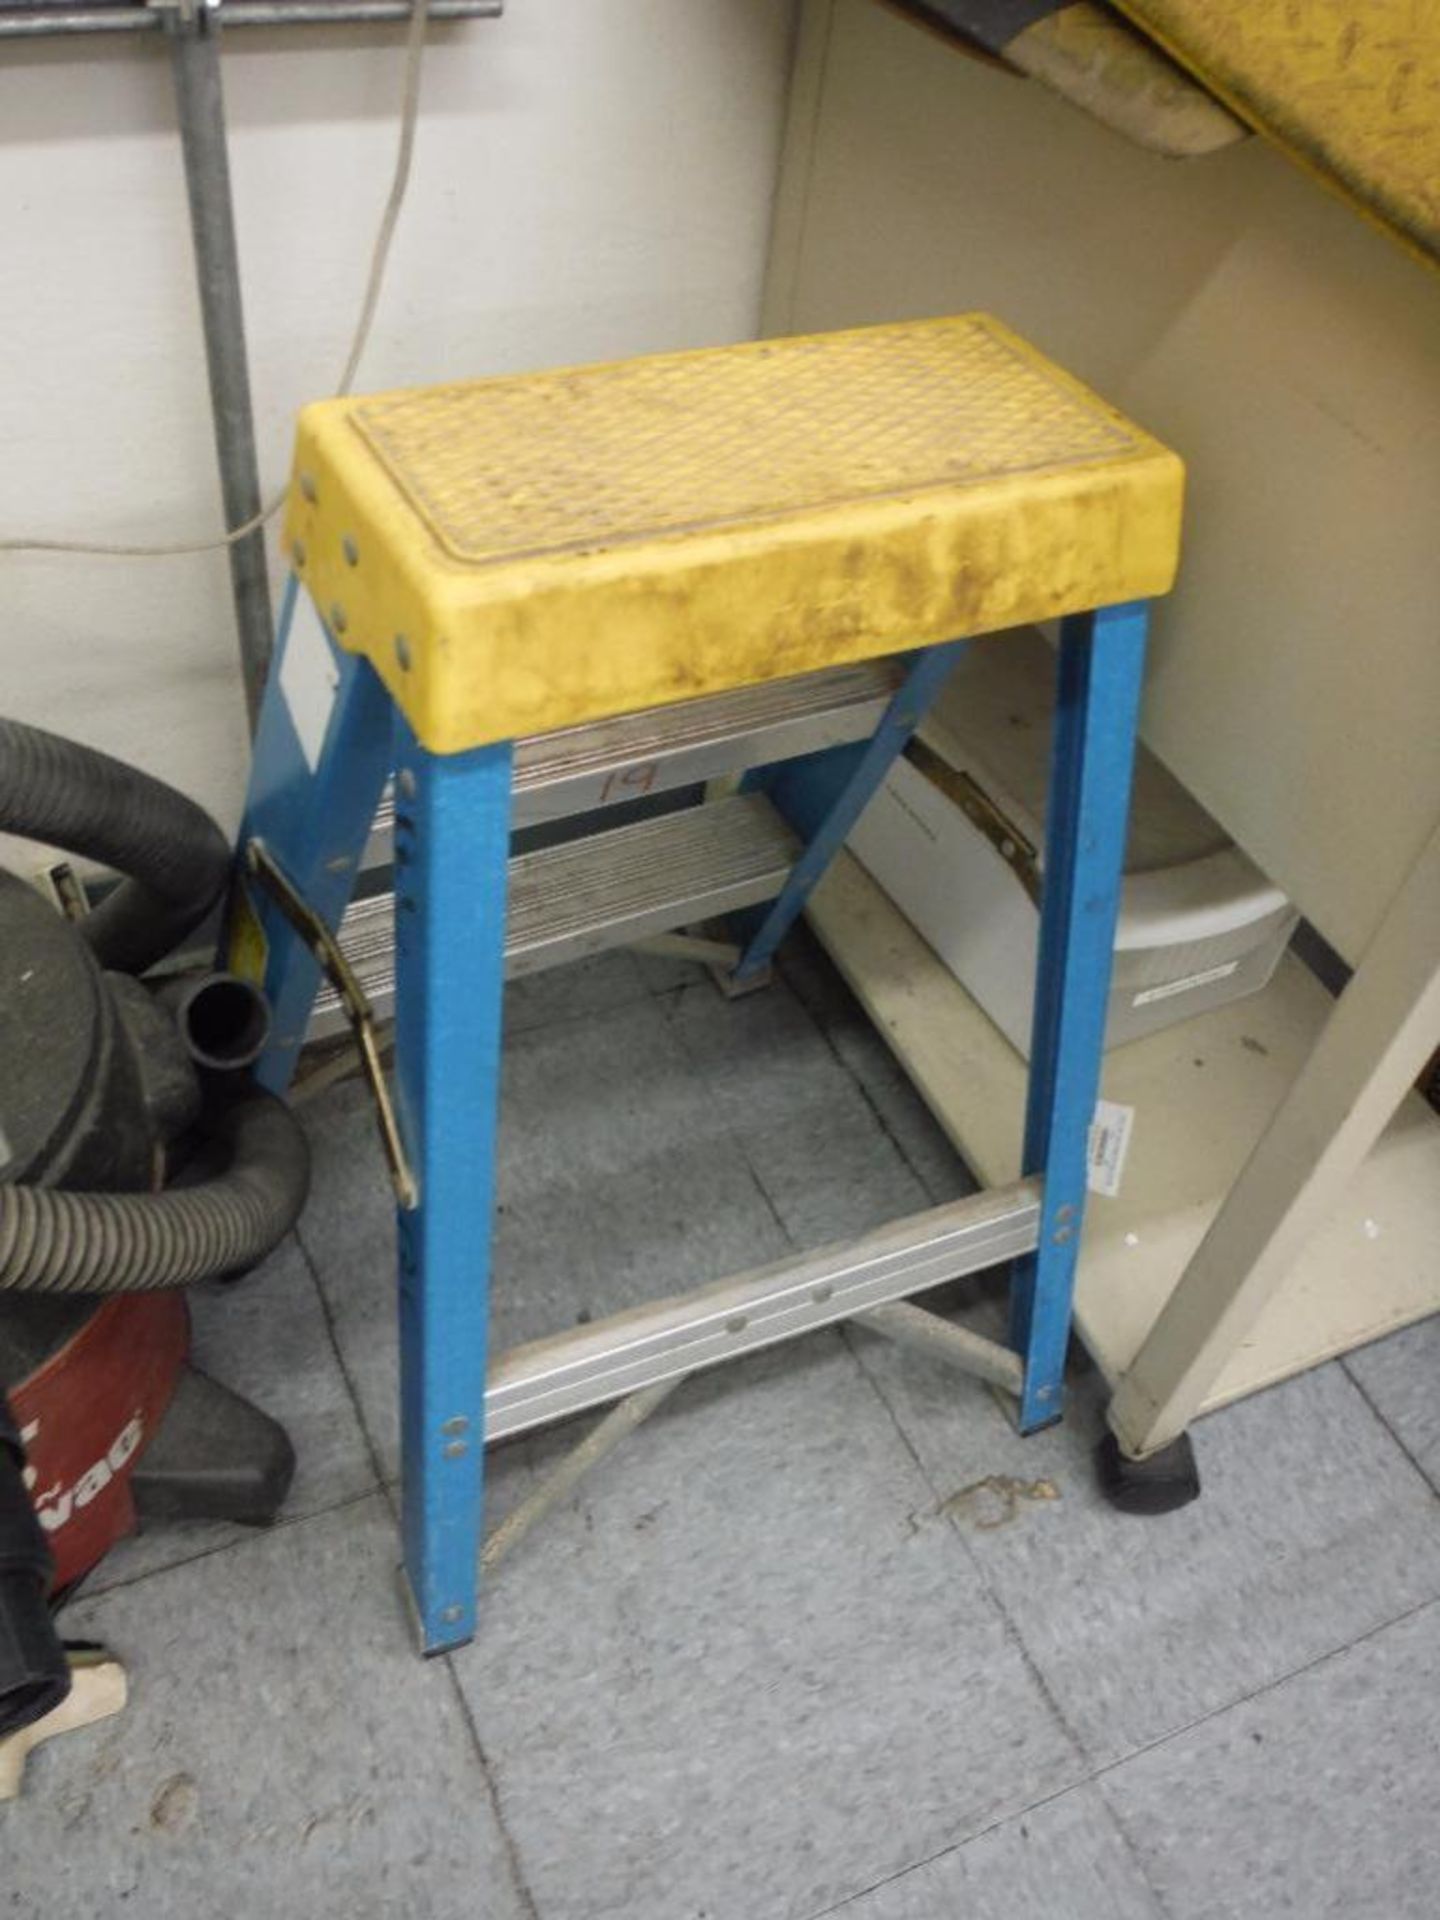 Shop-vac, fiberglass step stool, anti-fatigue mats ** Rigging Fee: $25 ** - Image 4 of 7